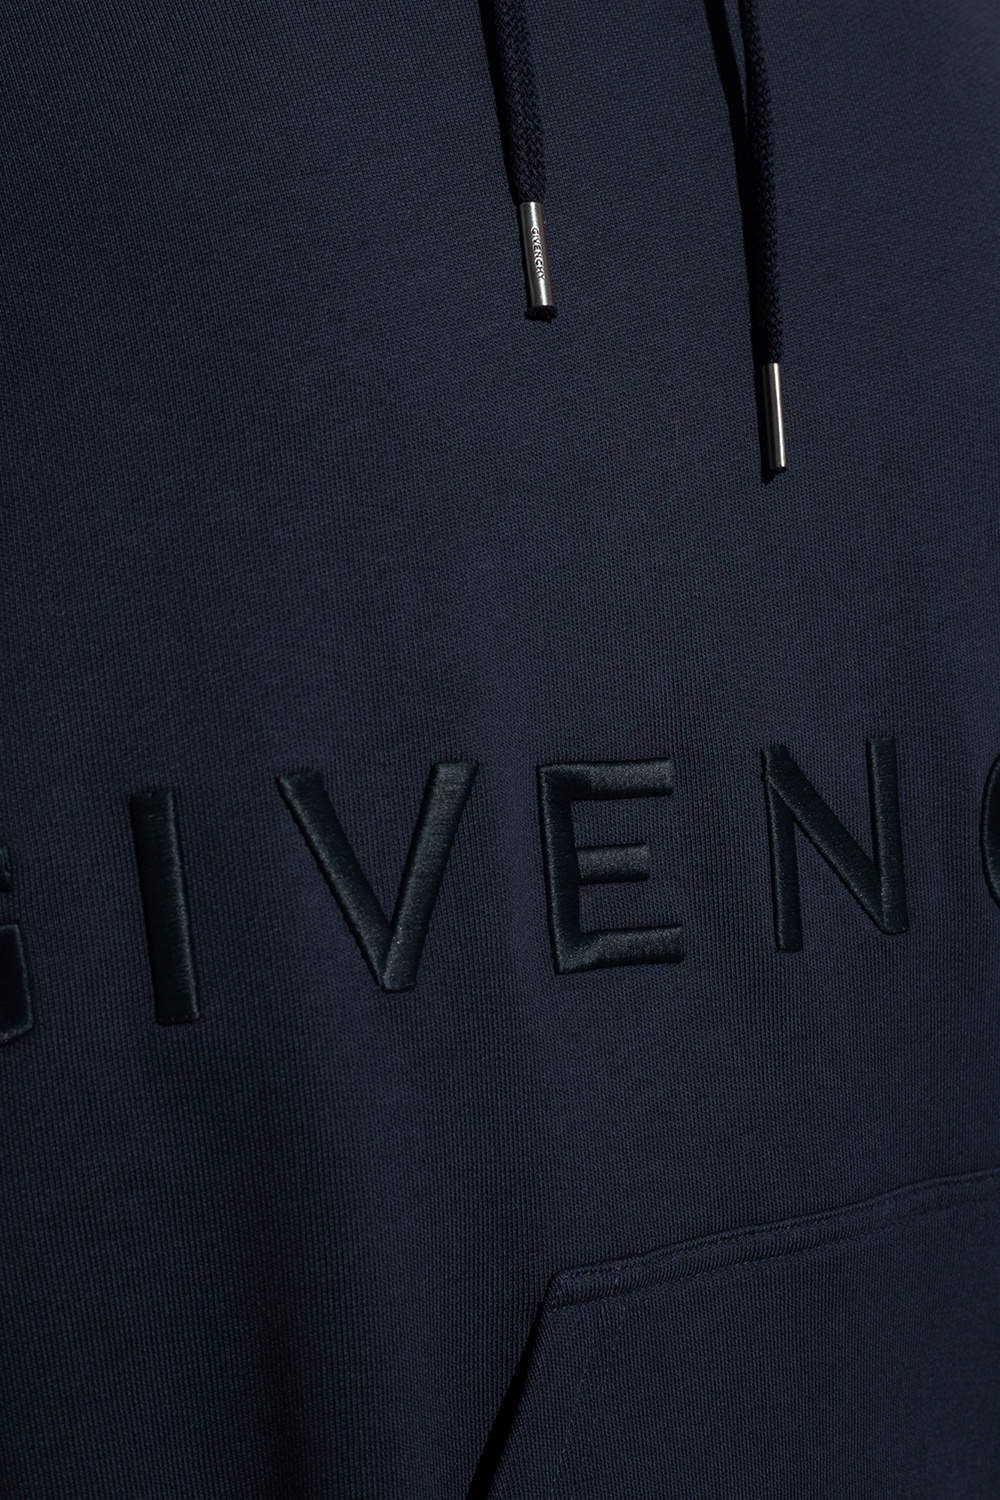 Givenchy givenchy small 4g crossbody bag item